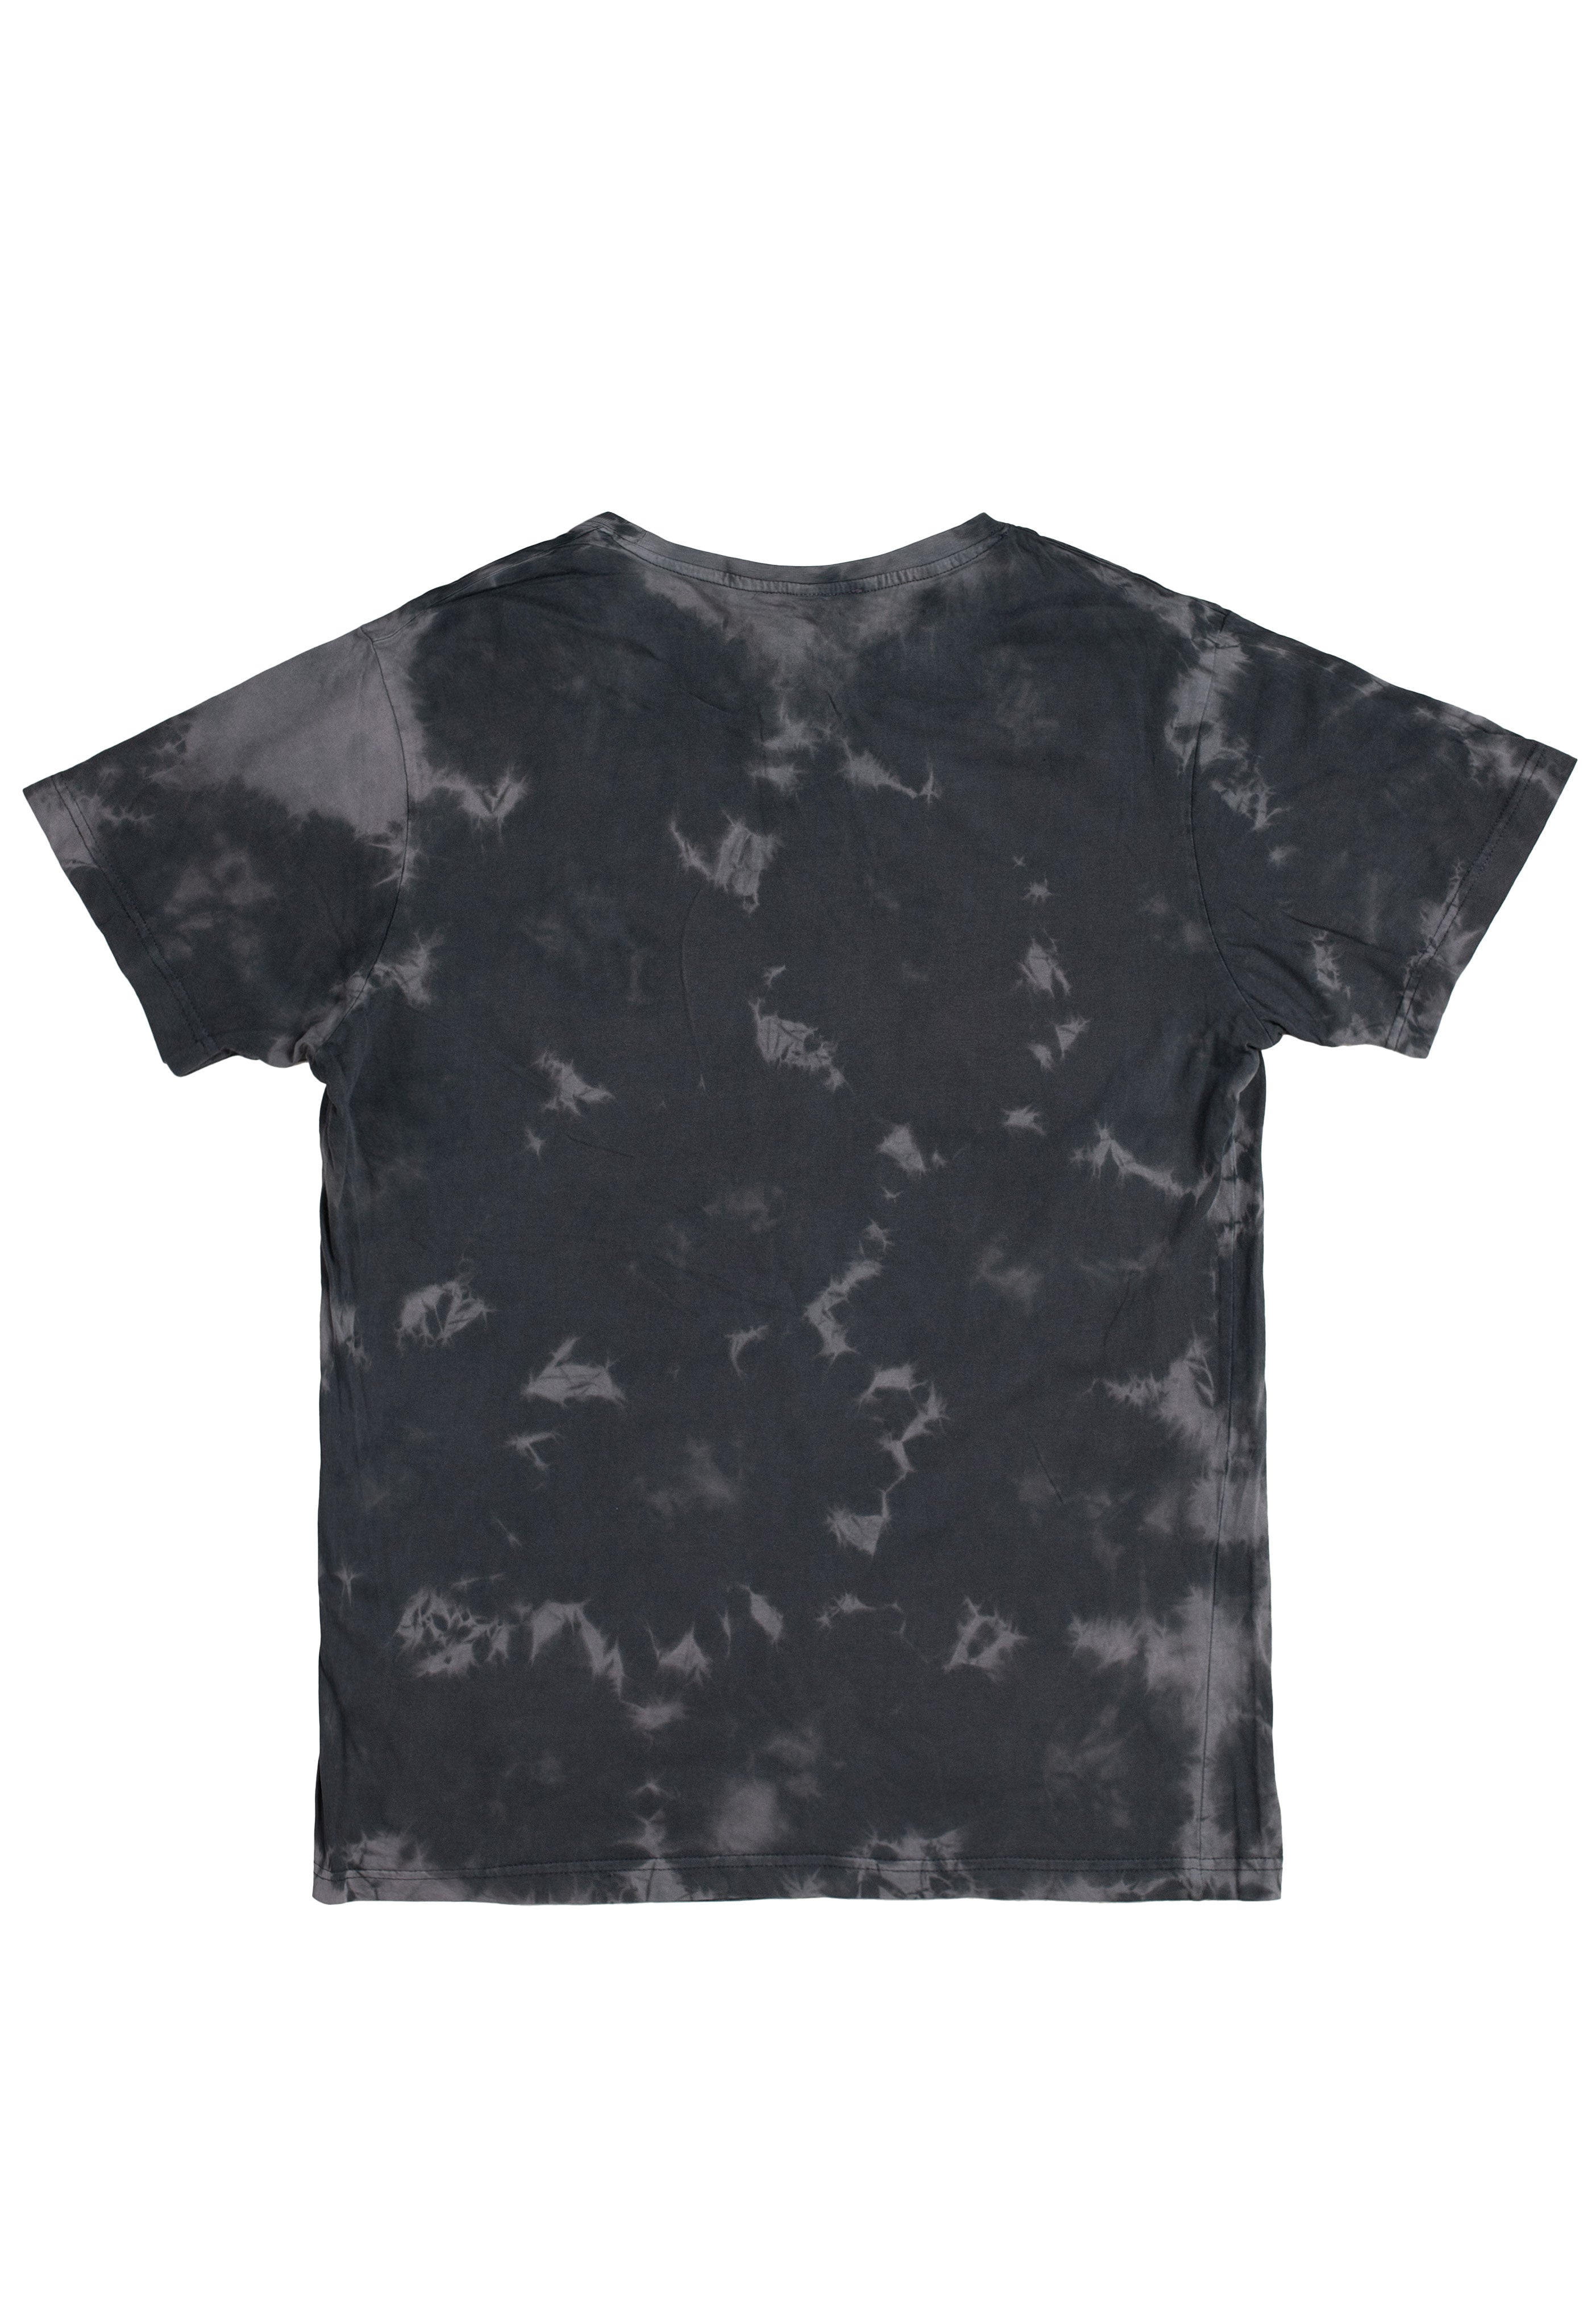 Chelsea Grin - Evil Logo Dark Tie Dye - T-Shirt | Neutral-Image